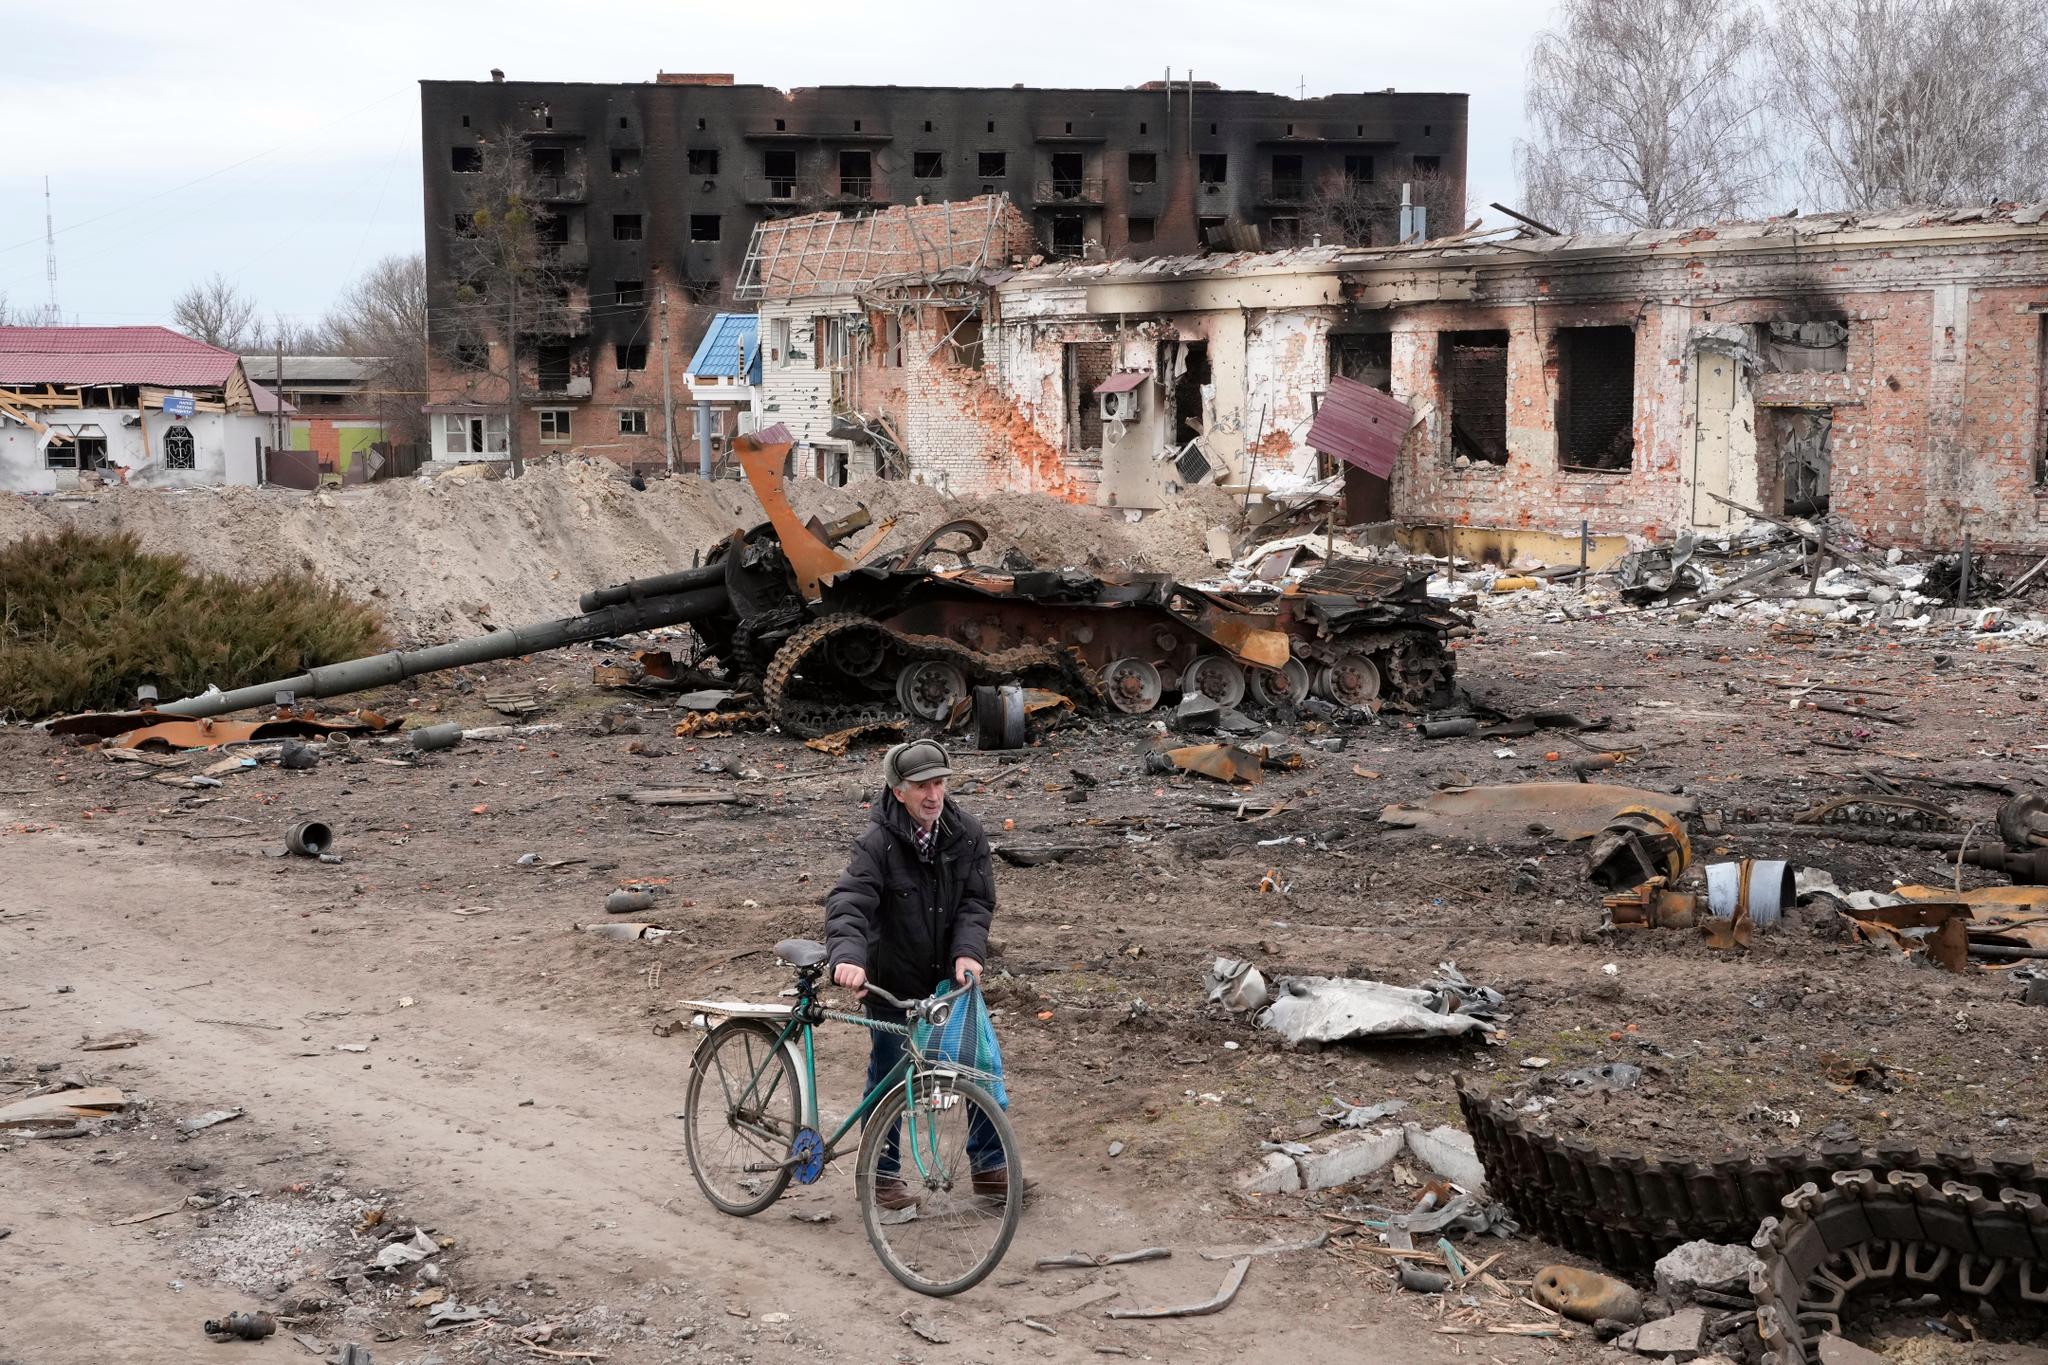 This happened in Ukraine last night: Zelensky promises reparations